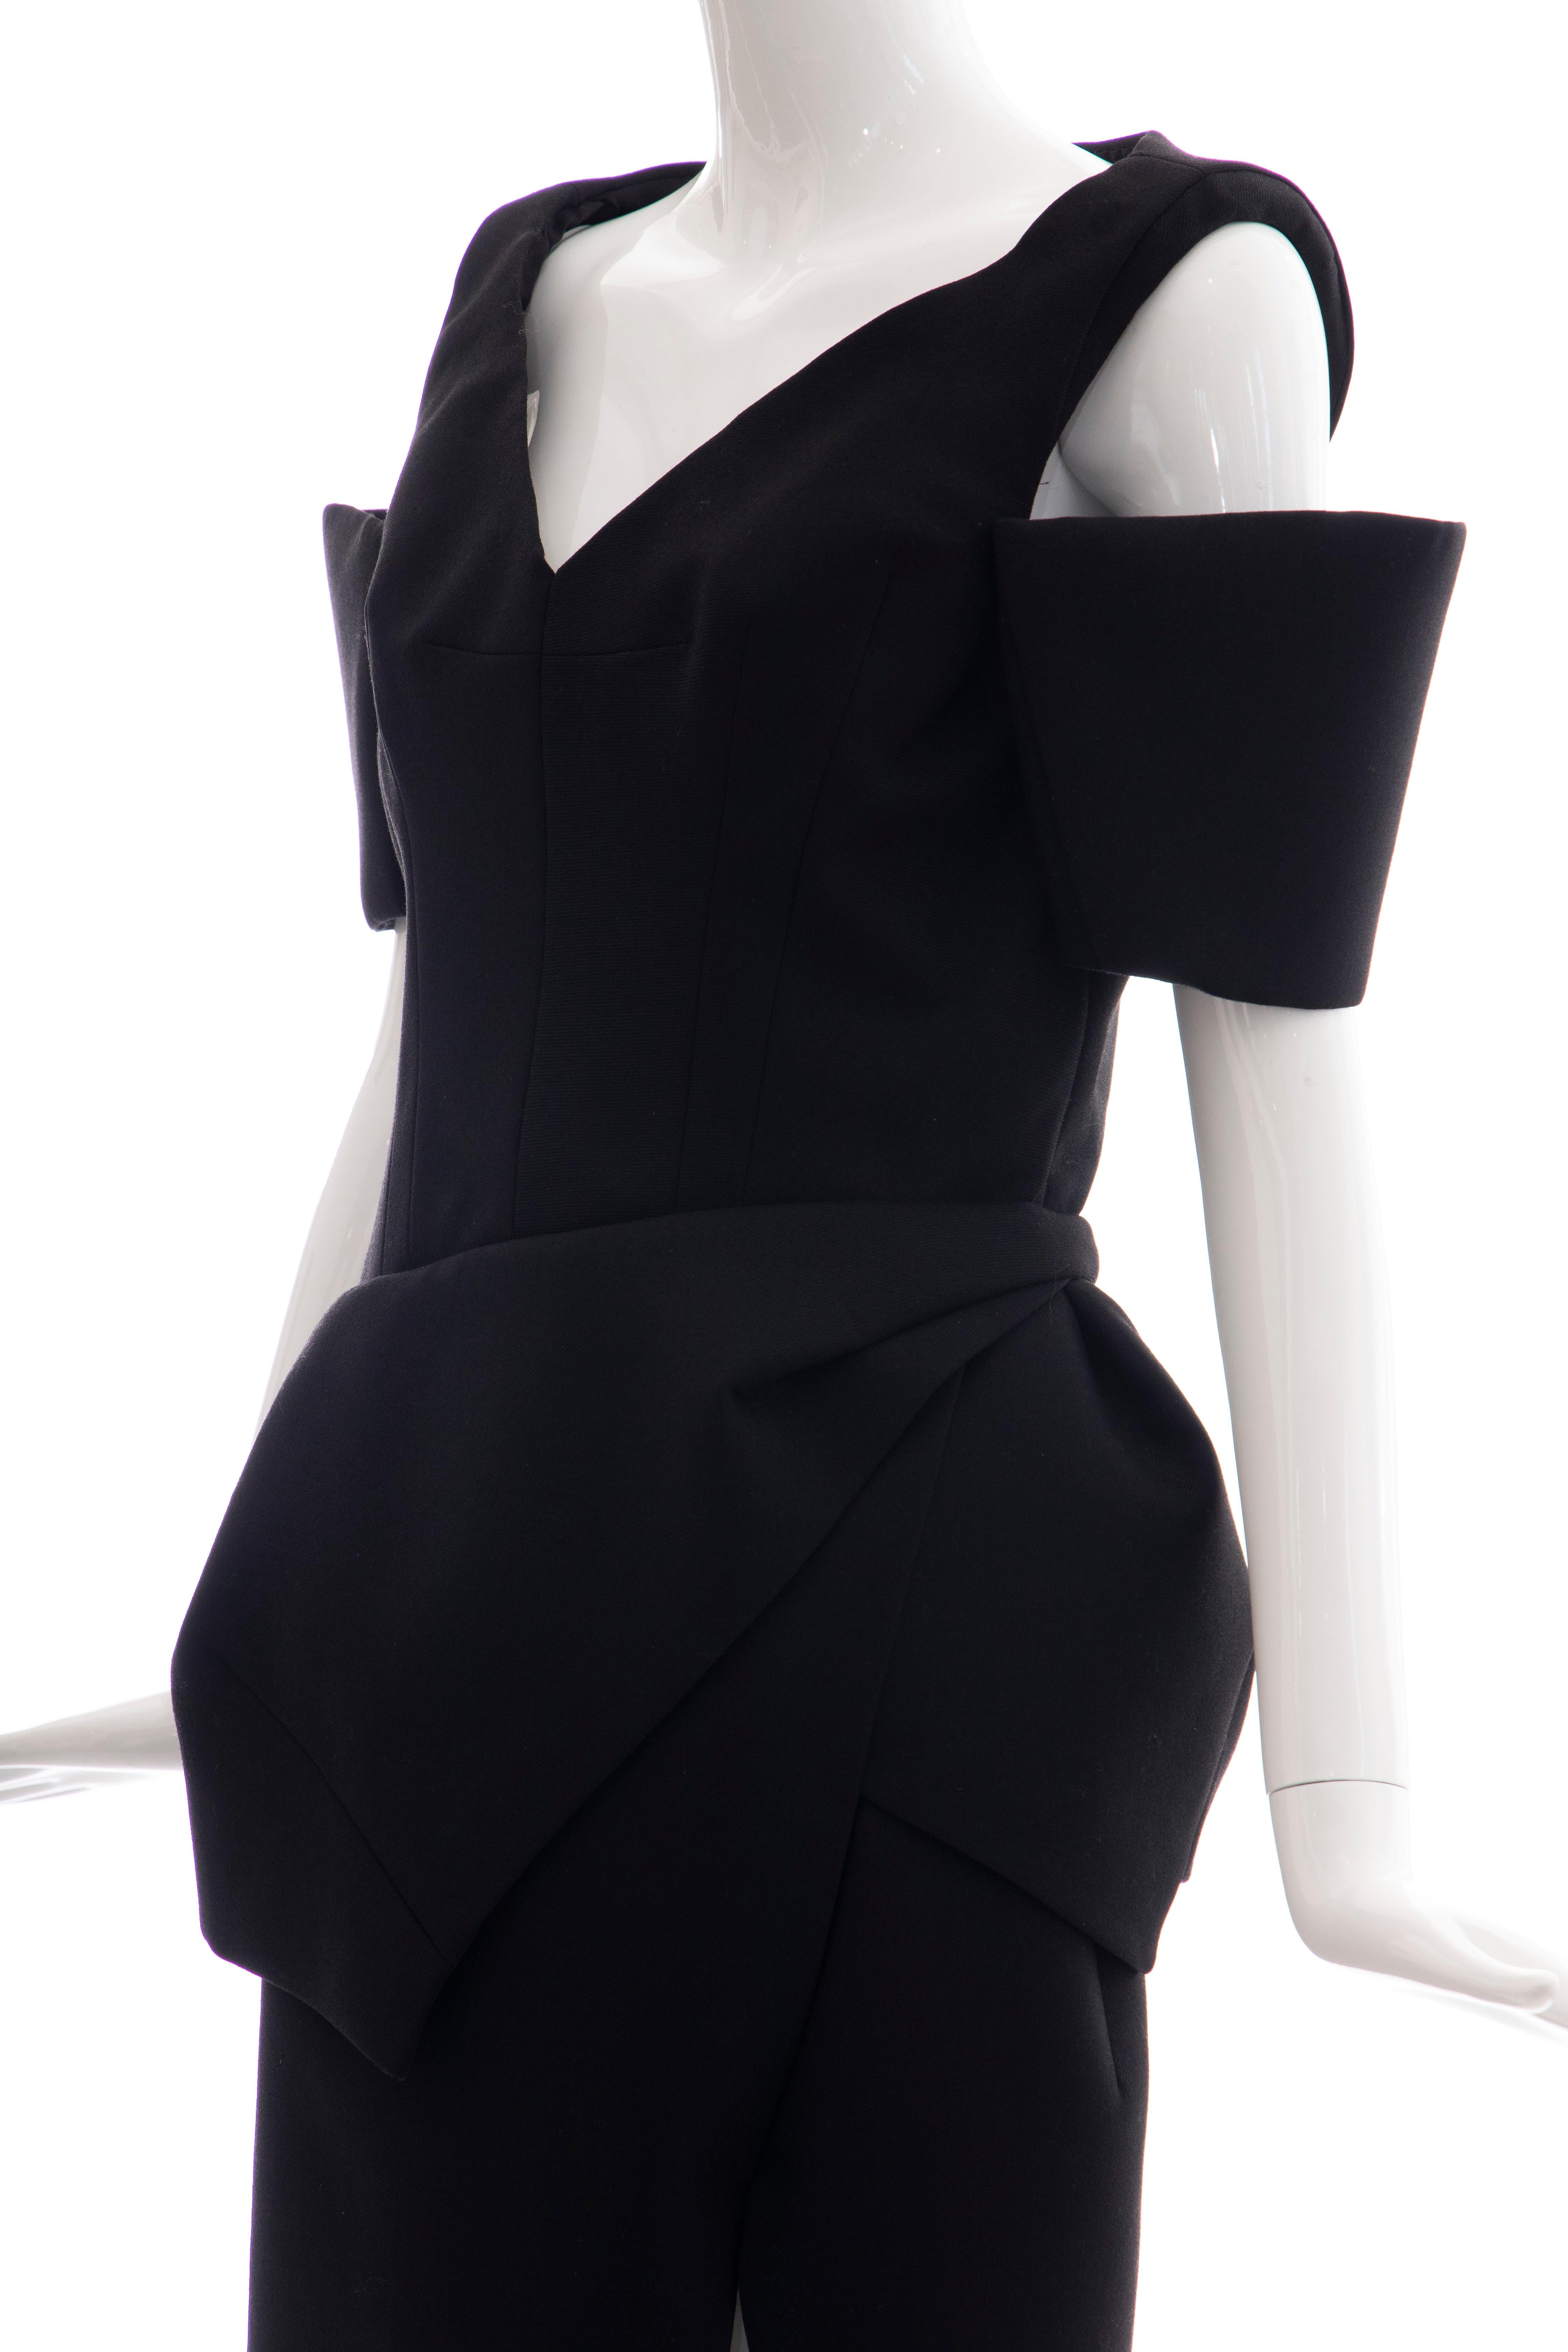 Nicolas Ghesquière for Balenciaga Runway Black Wool Structured Dress, Fall 2008 For Sale 5